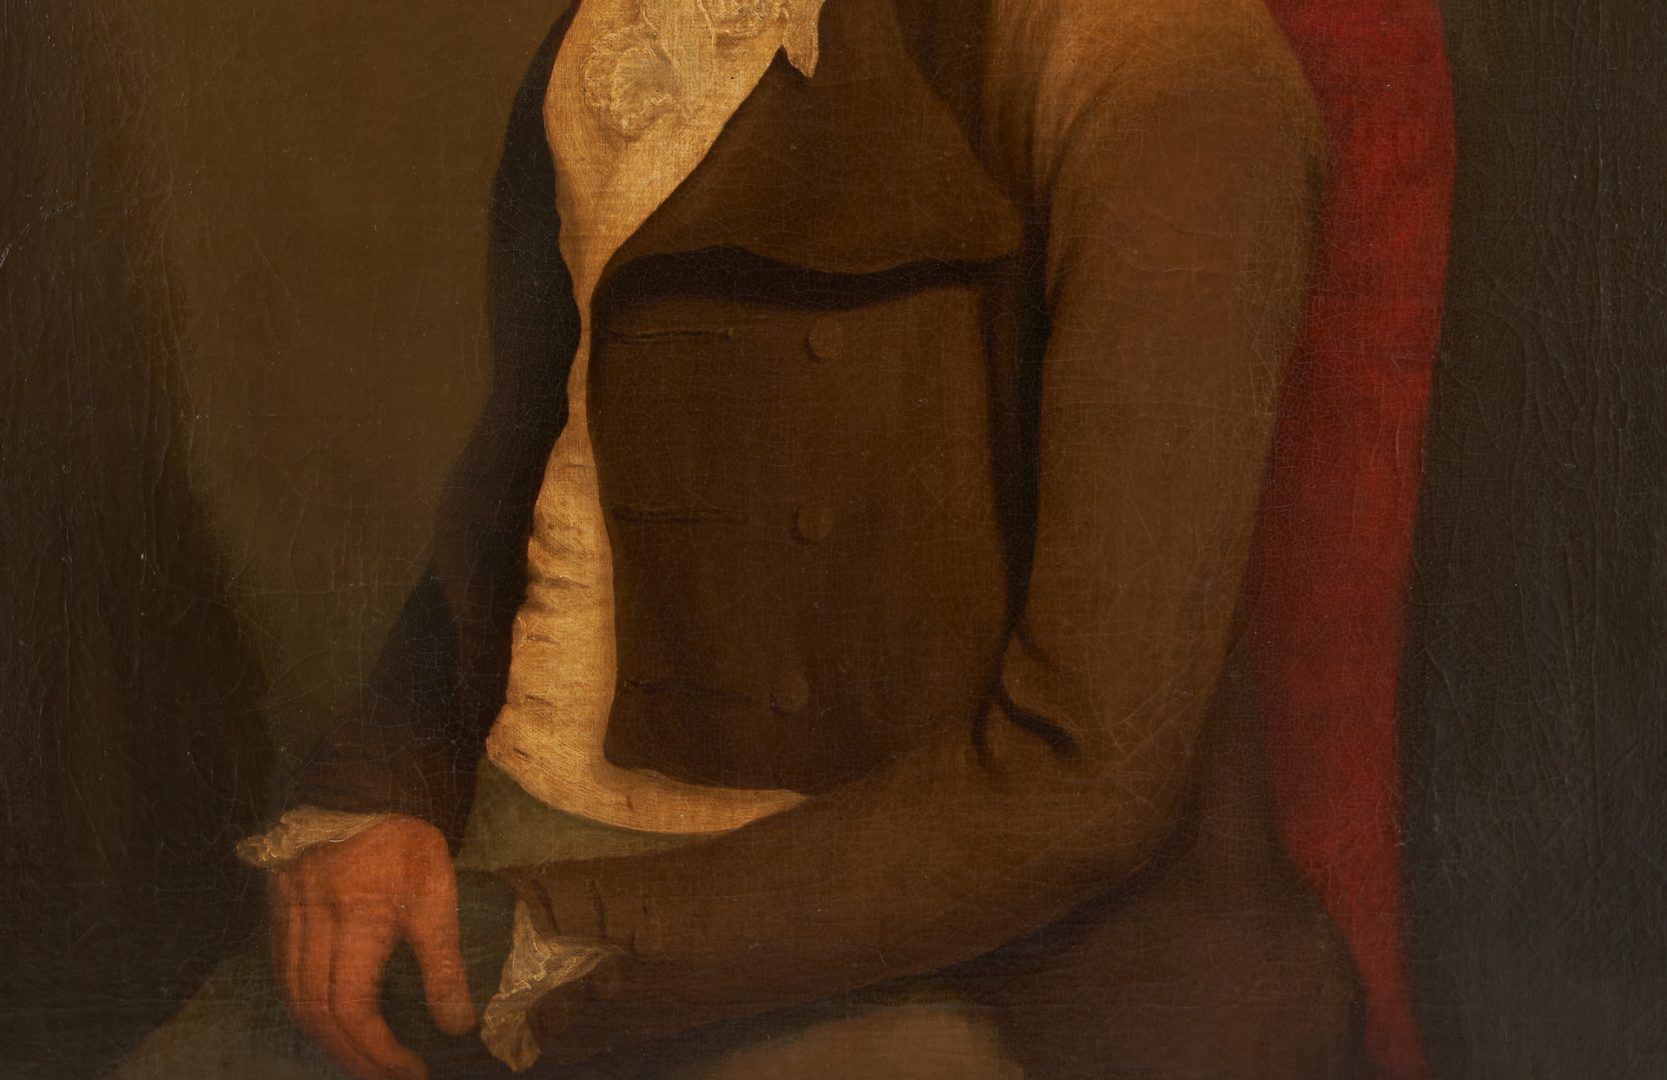 Lot 182: 18th Century Oil Portrait of a Gentleman